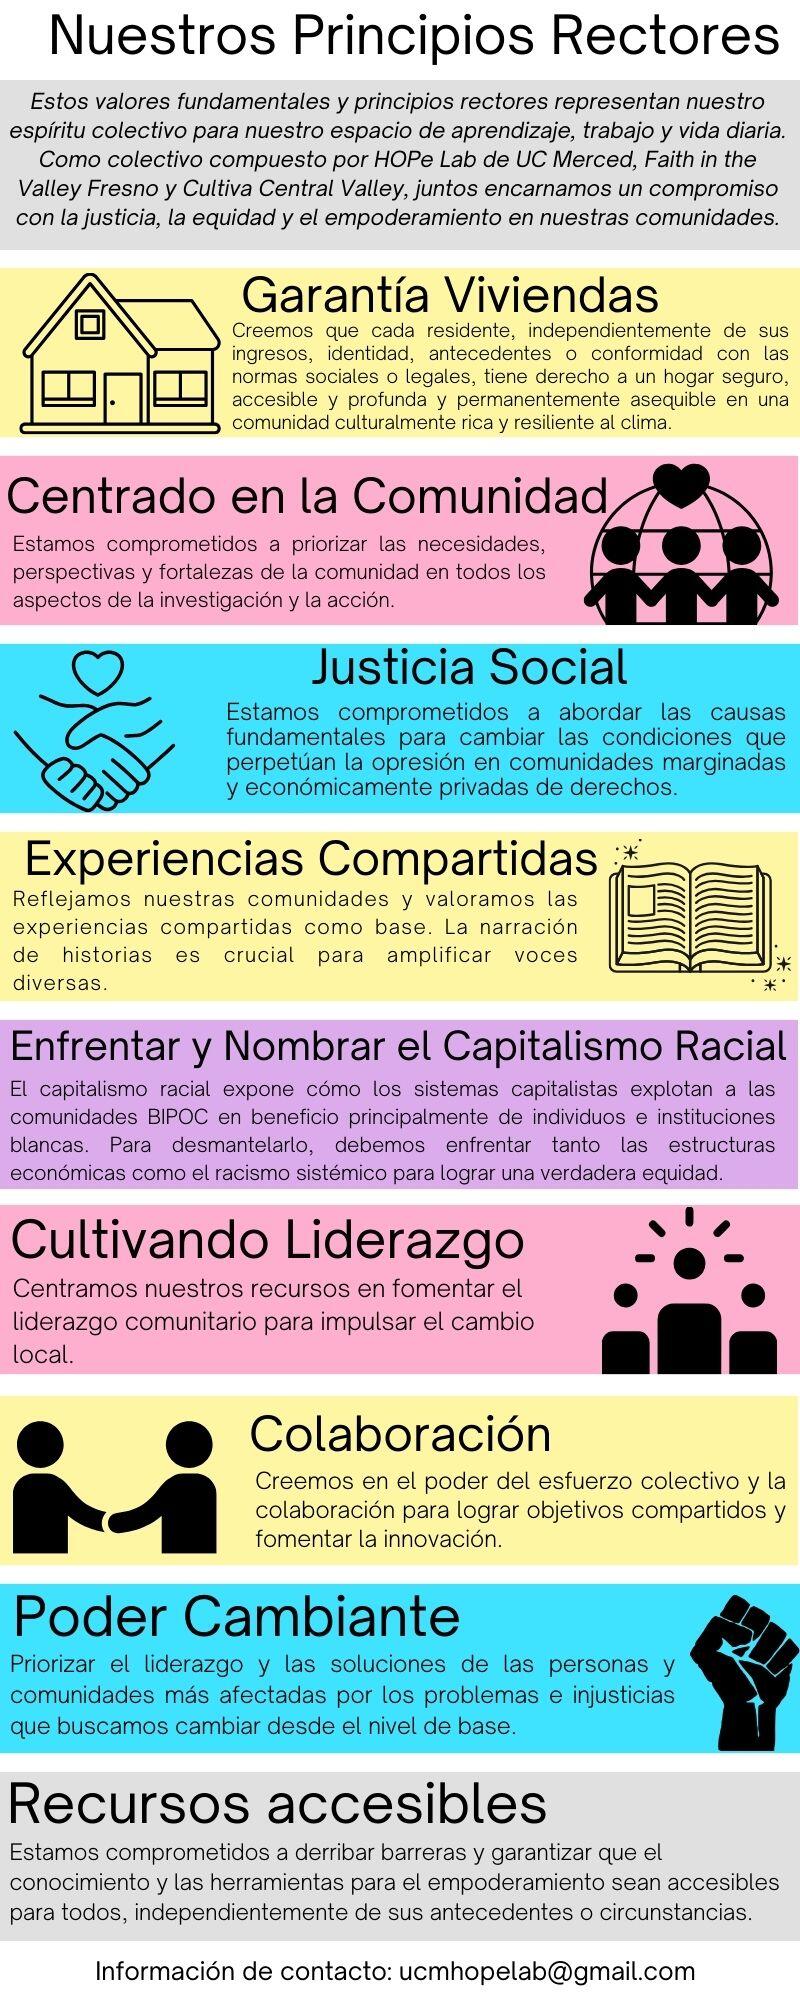 Our Guiding Principles - Spanish